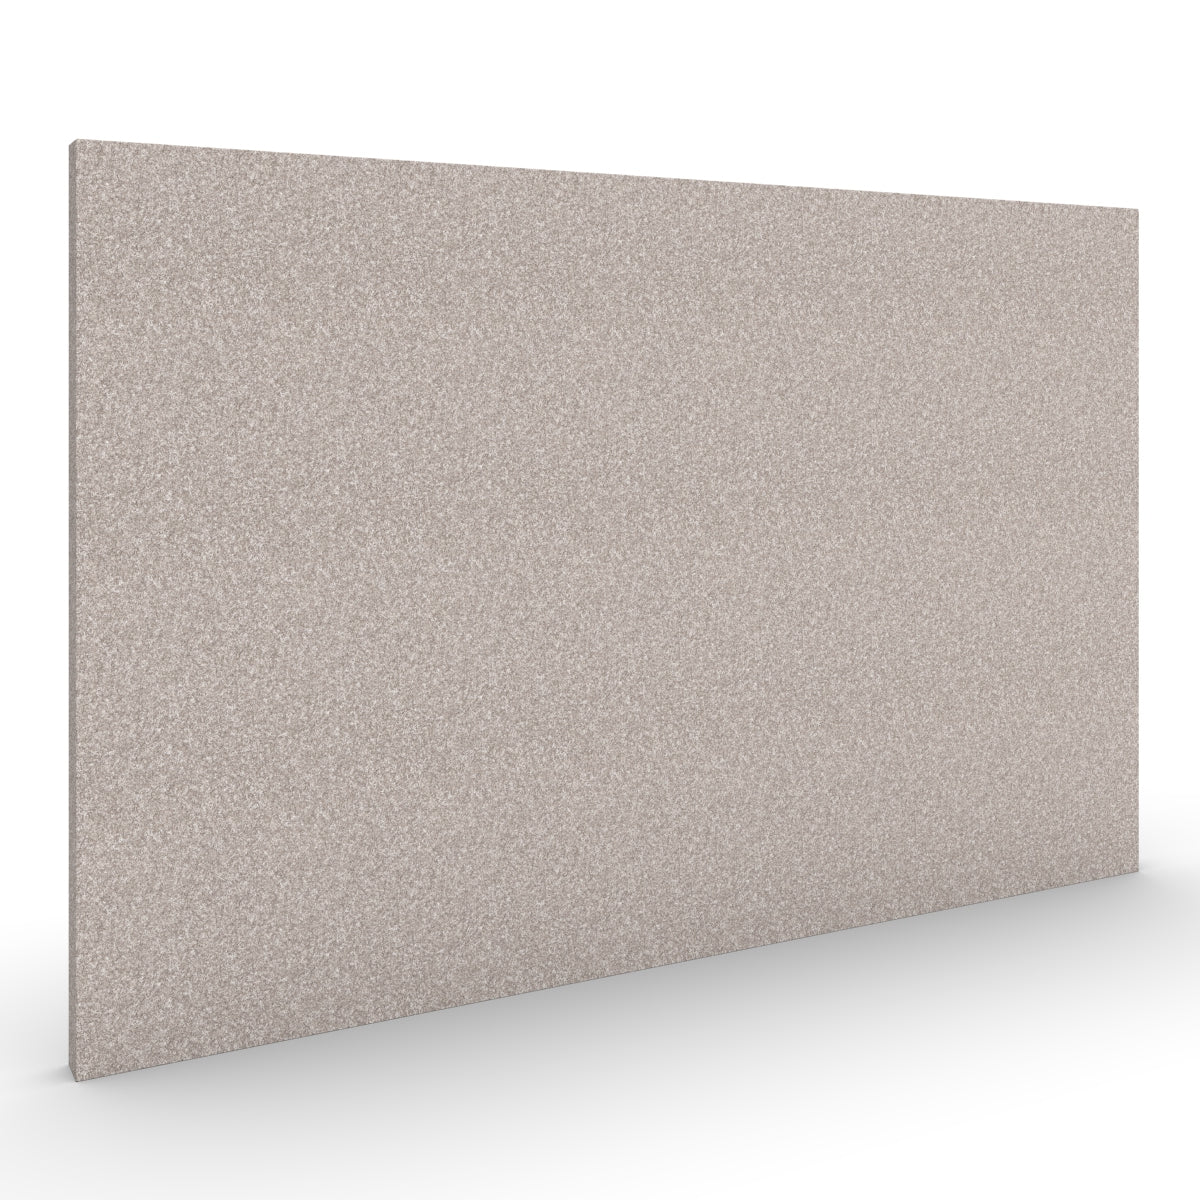 Basic wall sound absorbers in natural beige. Size 116cmx174cm. Akustikkplater og lyddemping vegg